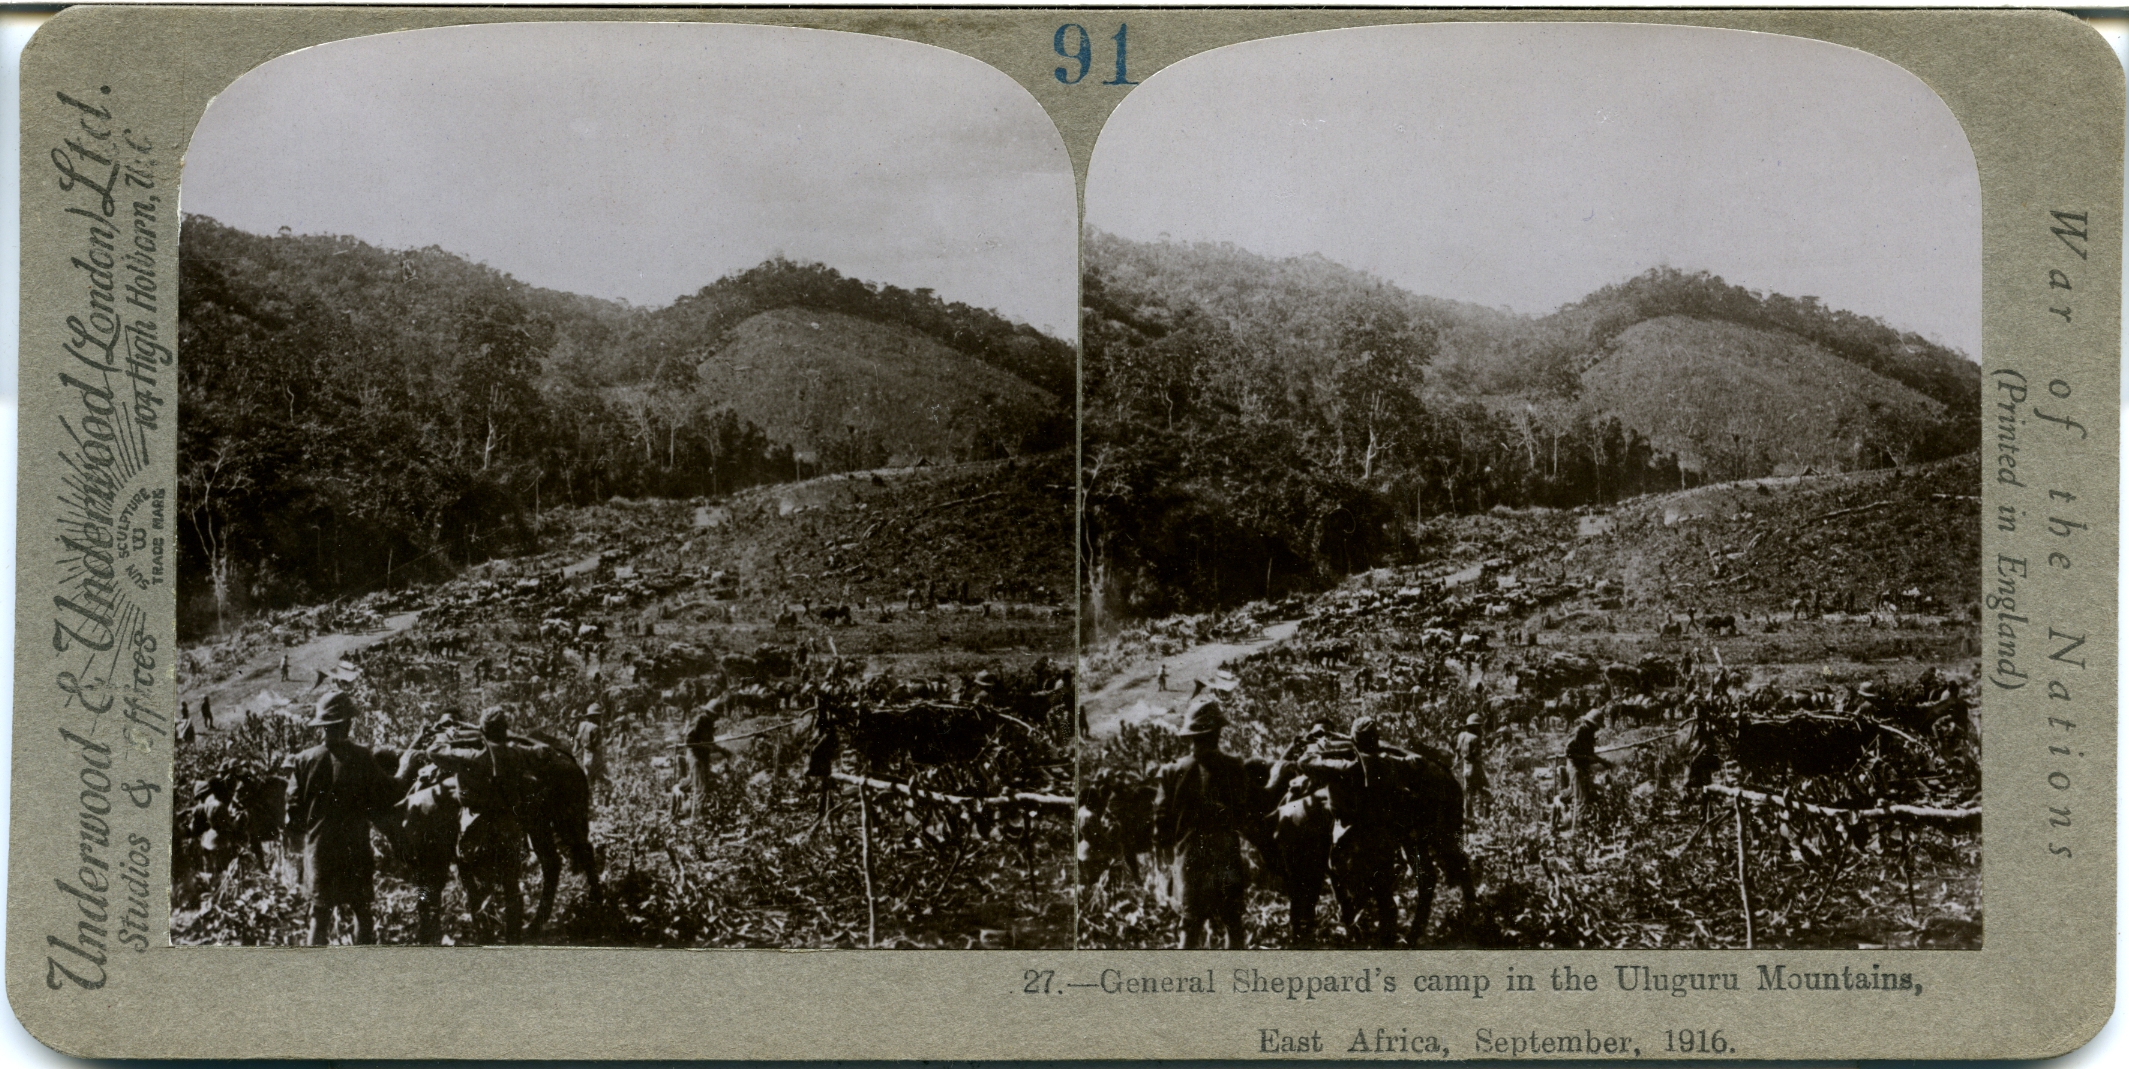 General Sheppard's camp in the Uluguru Mountains, East Africa, September, 1916